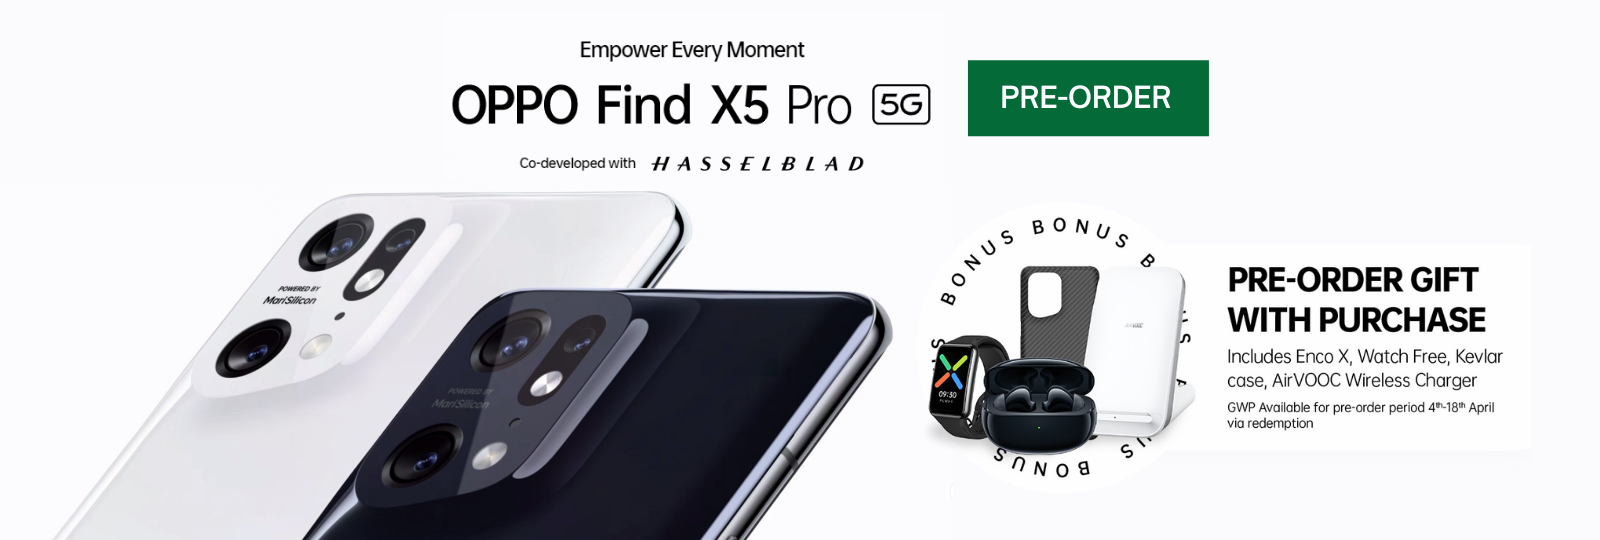 Find X5 Pro bonus offer